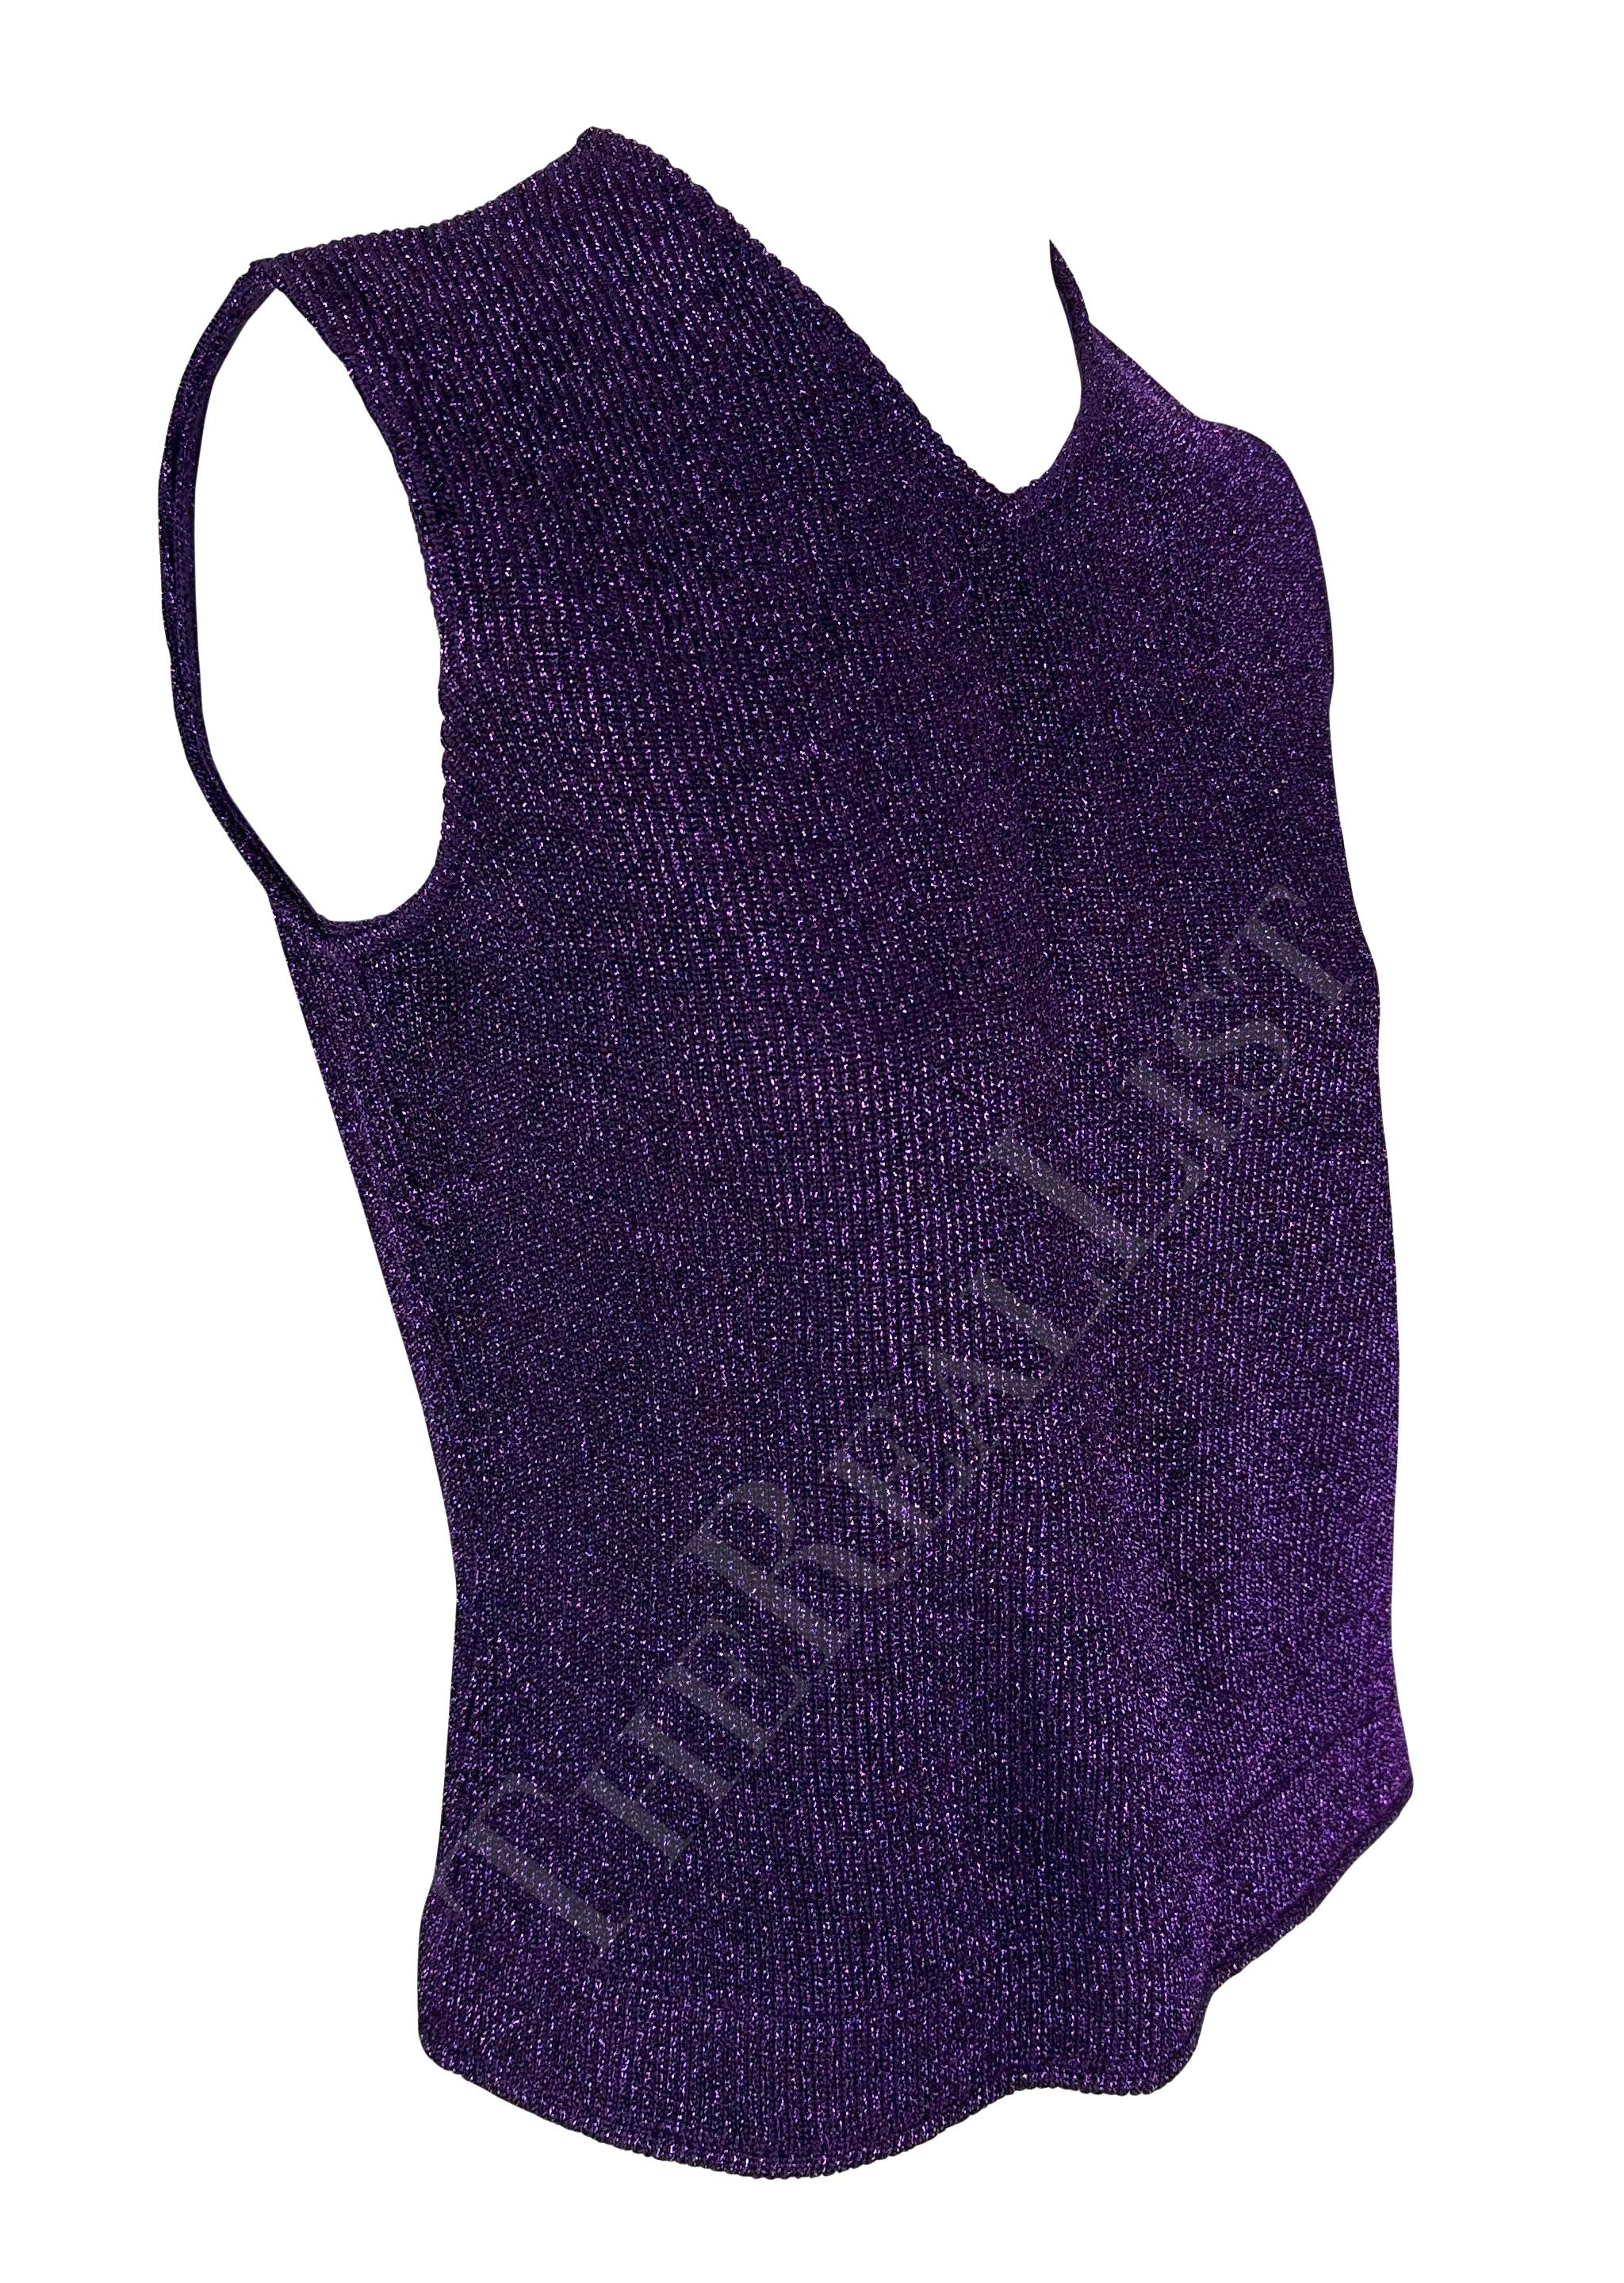 F/W 1996 Salvatore Ferragamo Purple Metallic Knit Sleeveless Top For Sale 4